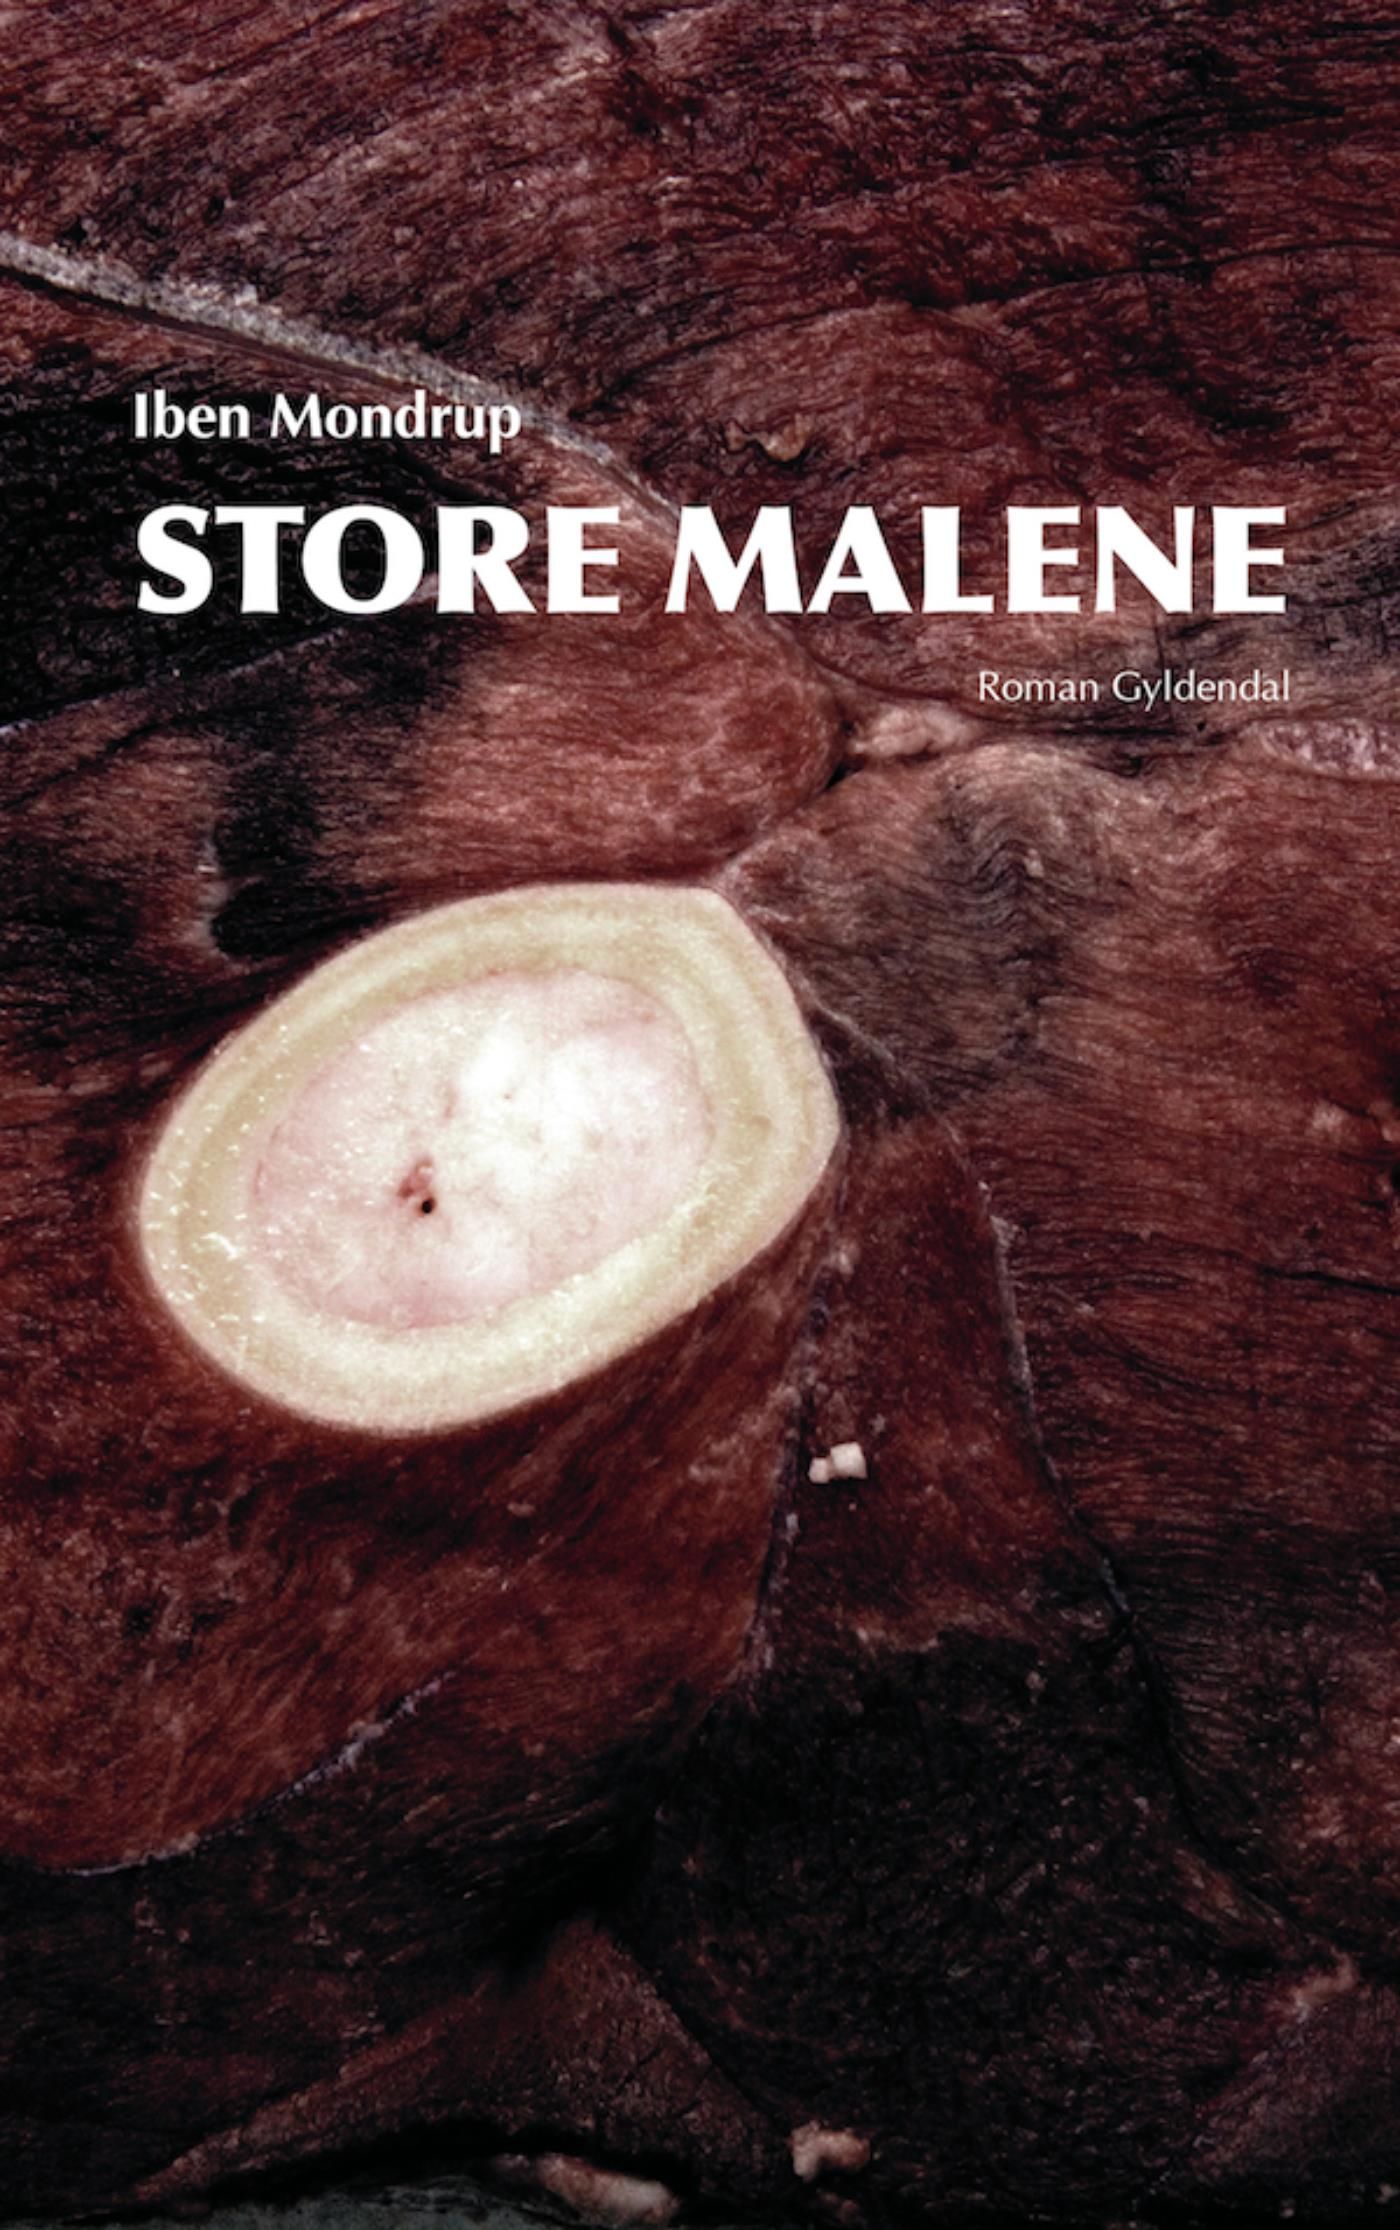 Store Malene, eBook by Iben Mondrup